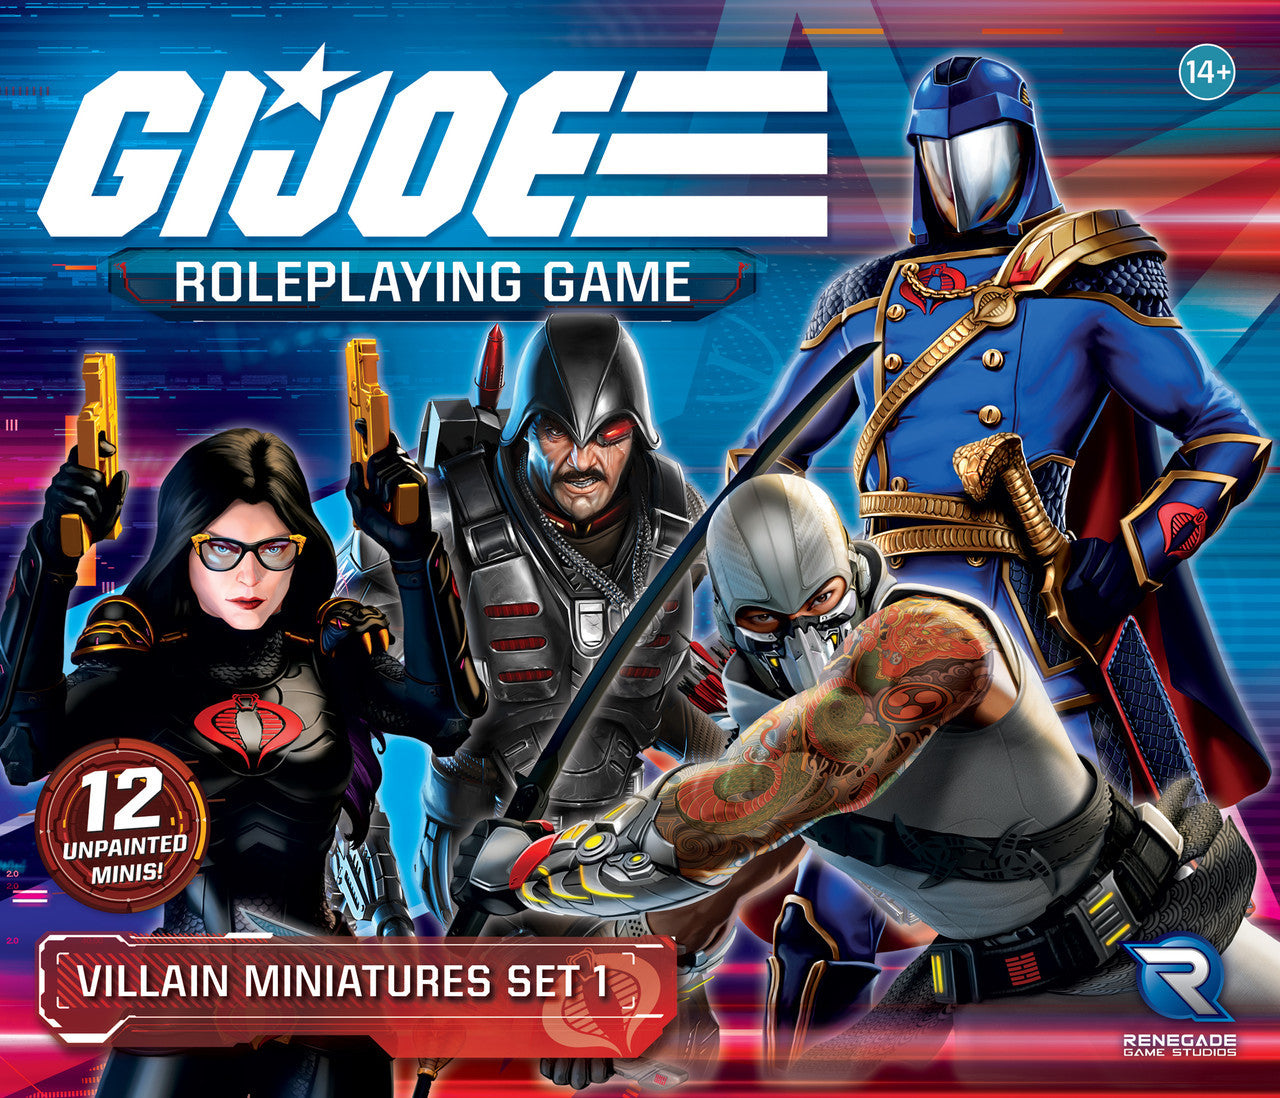 GI JOE Roleplaying Game Villain Miniatures Set 1